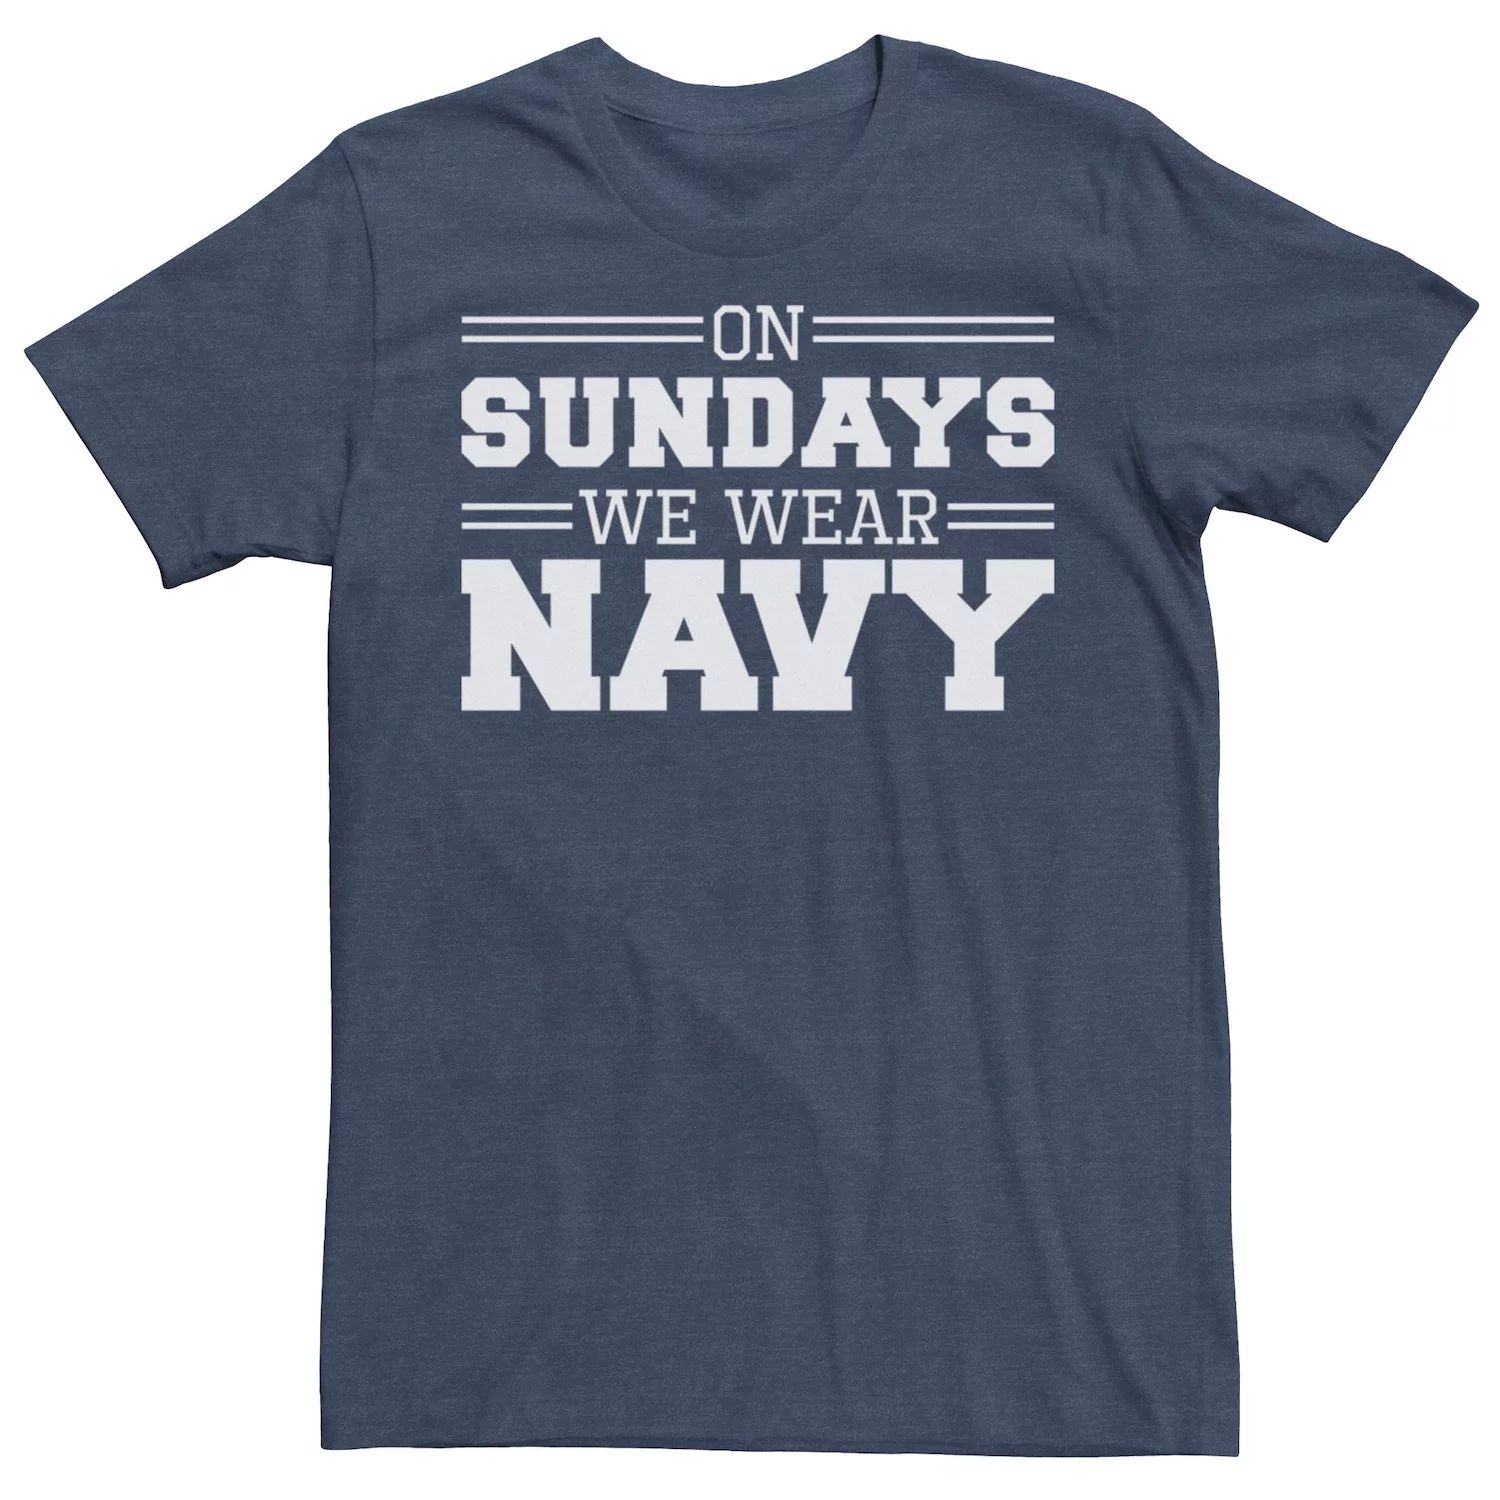 Мужская одежда по воскресеньям: темно-синяя футболка с рисунком Licensed Character